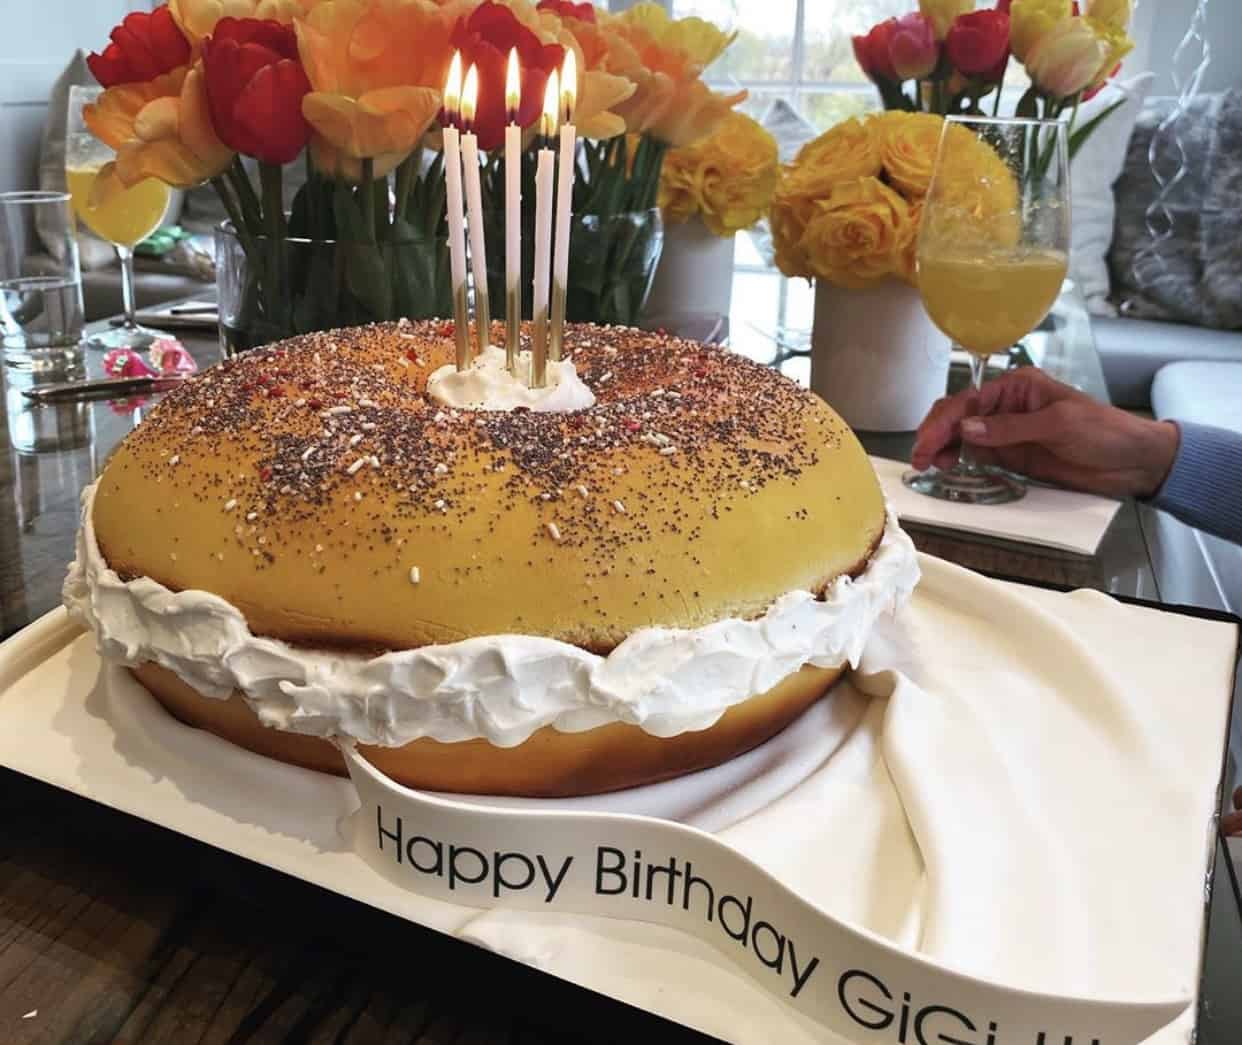 Gigi Hadid's birthday